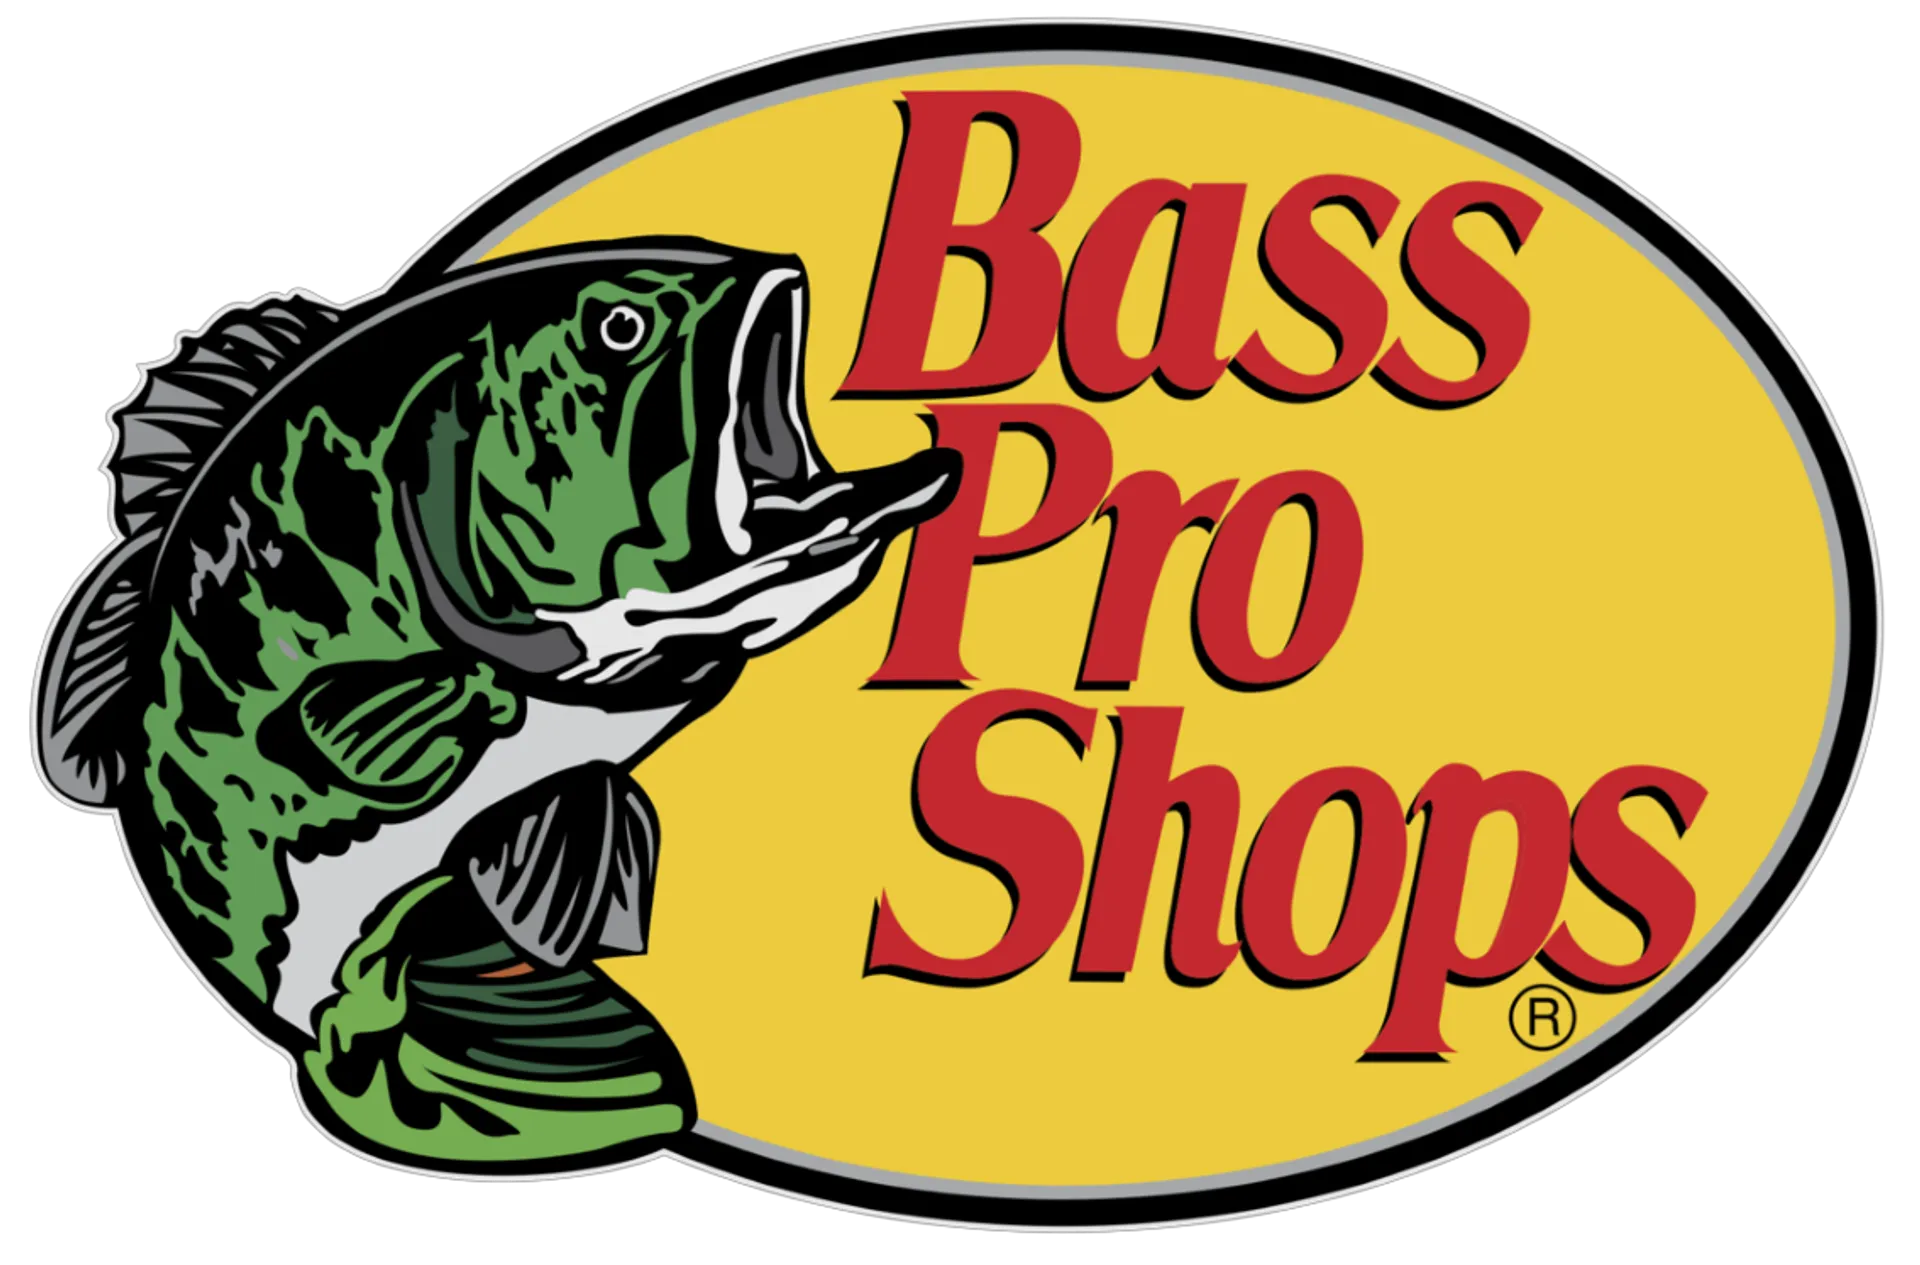 BASS PRO SHOPS logo